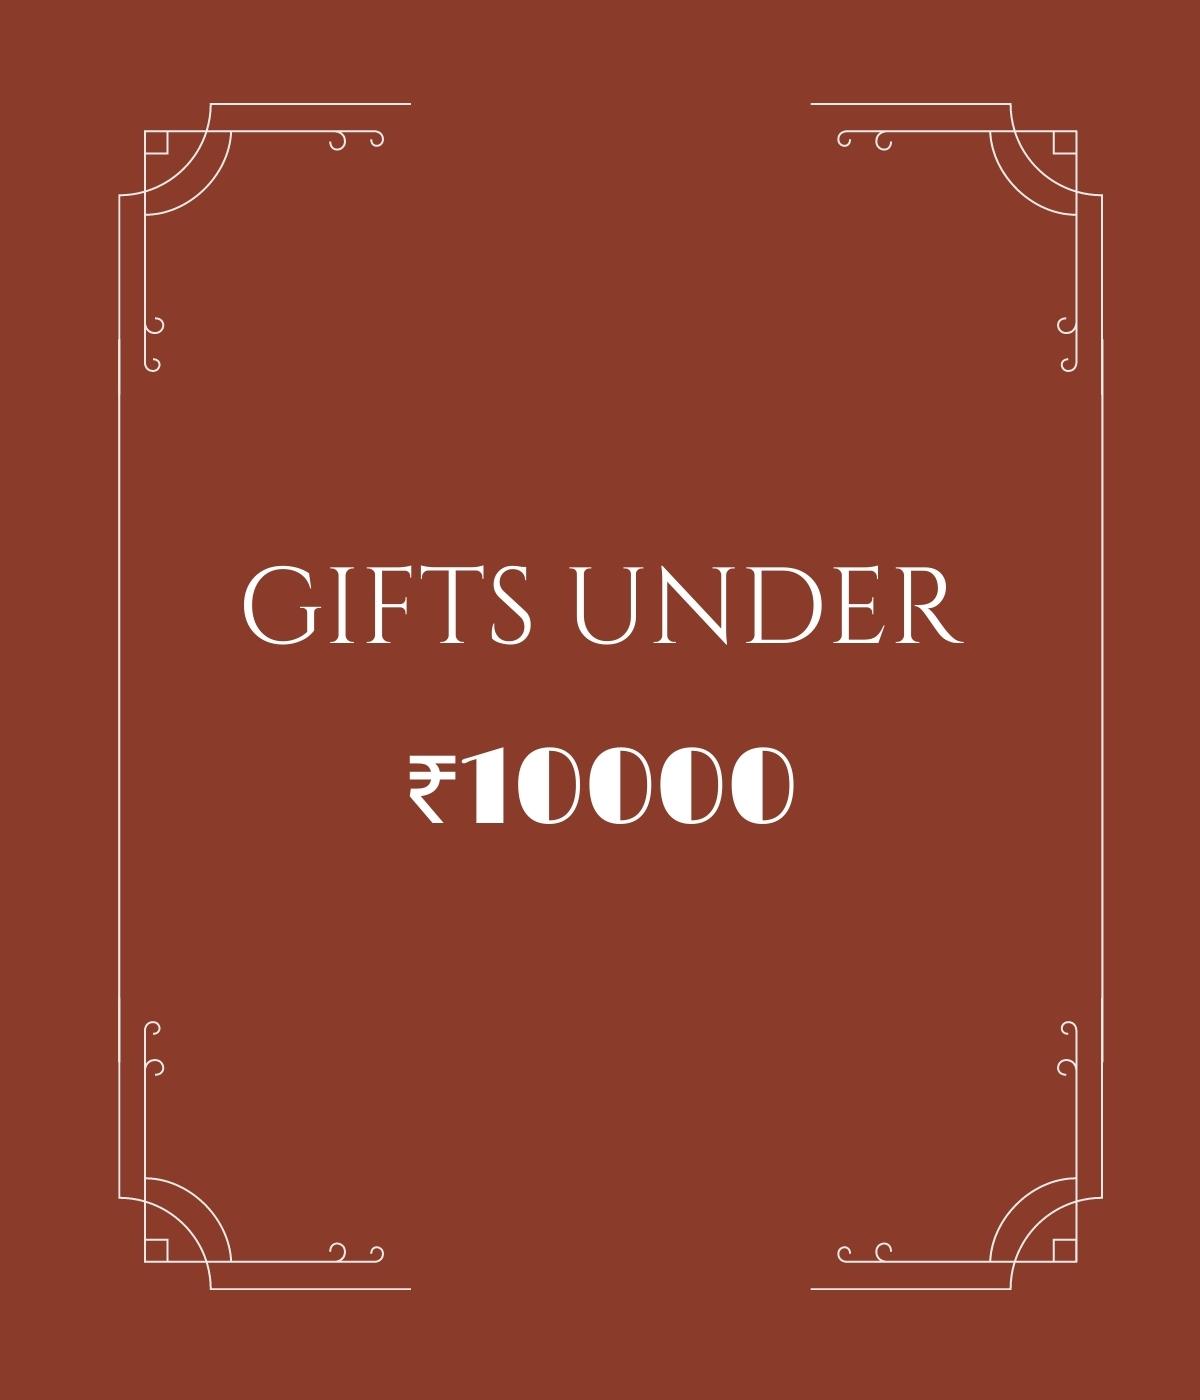 Gifts under ₹10000